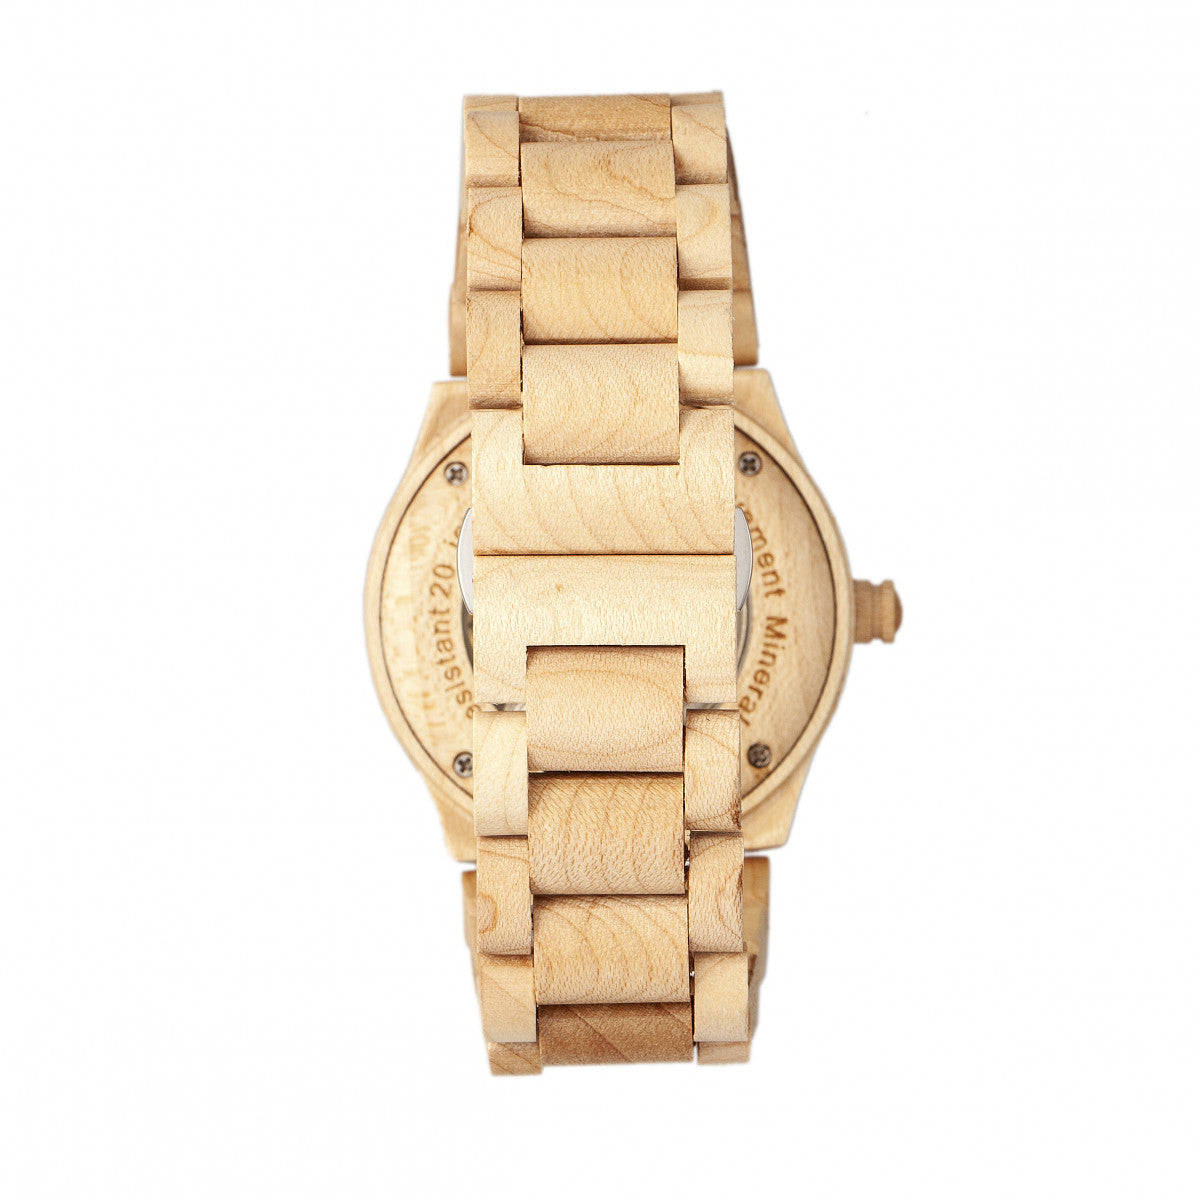 Earth Wood Grand Mesa Automatic Skeleton Bracelet Watch - Khaki/Tan - ETHEW3101